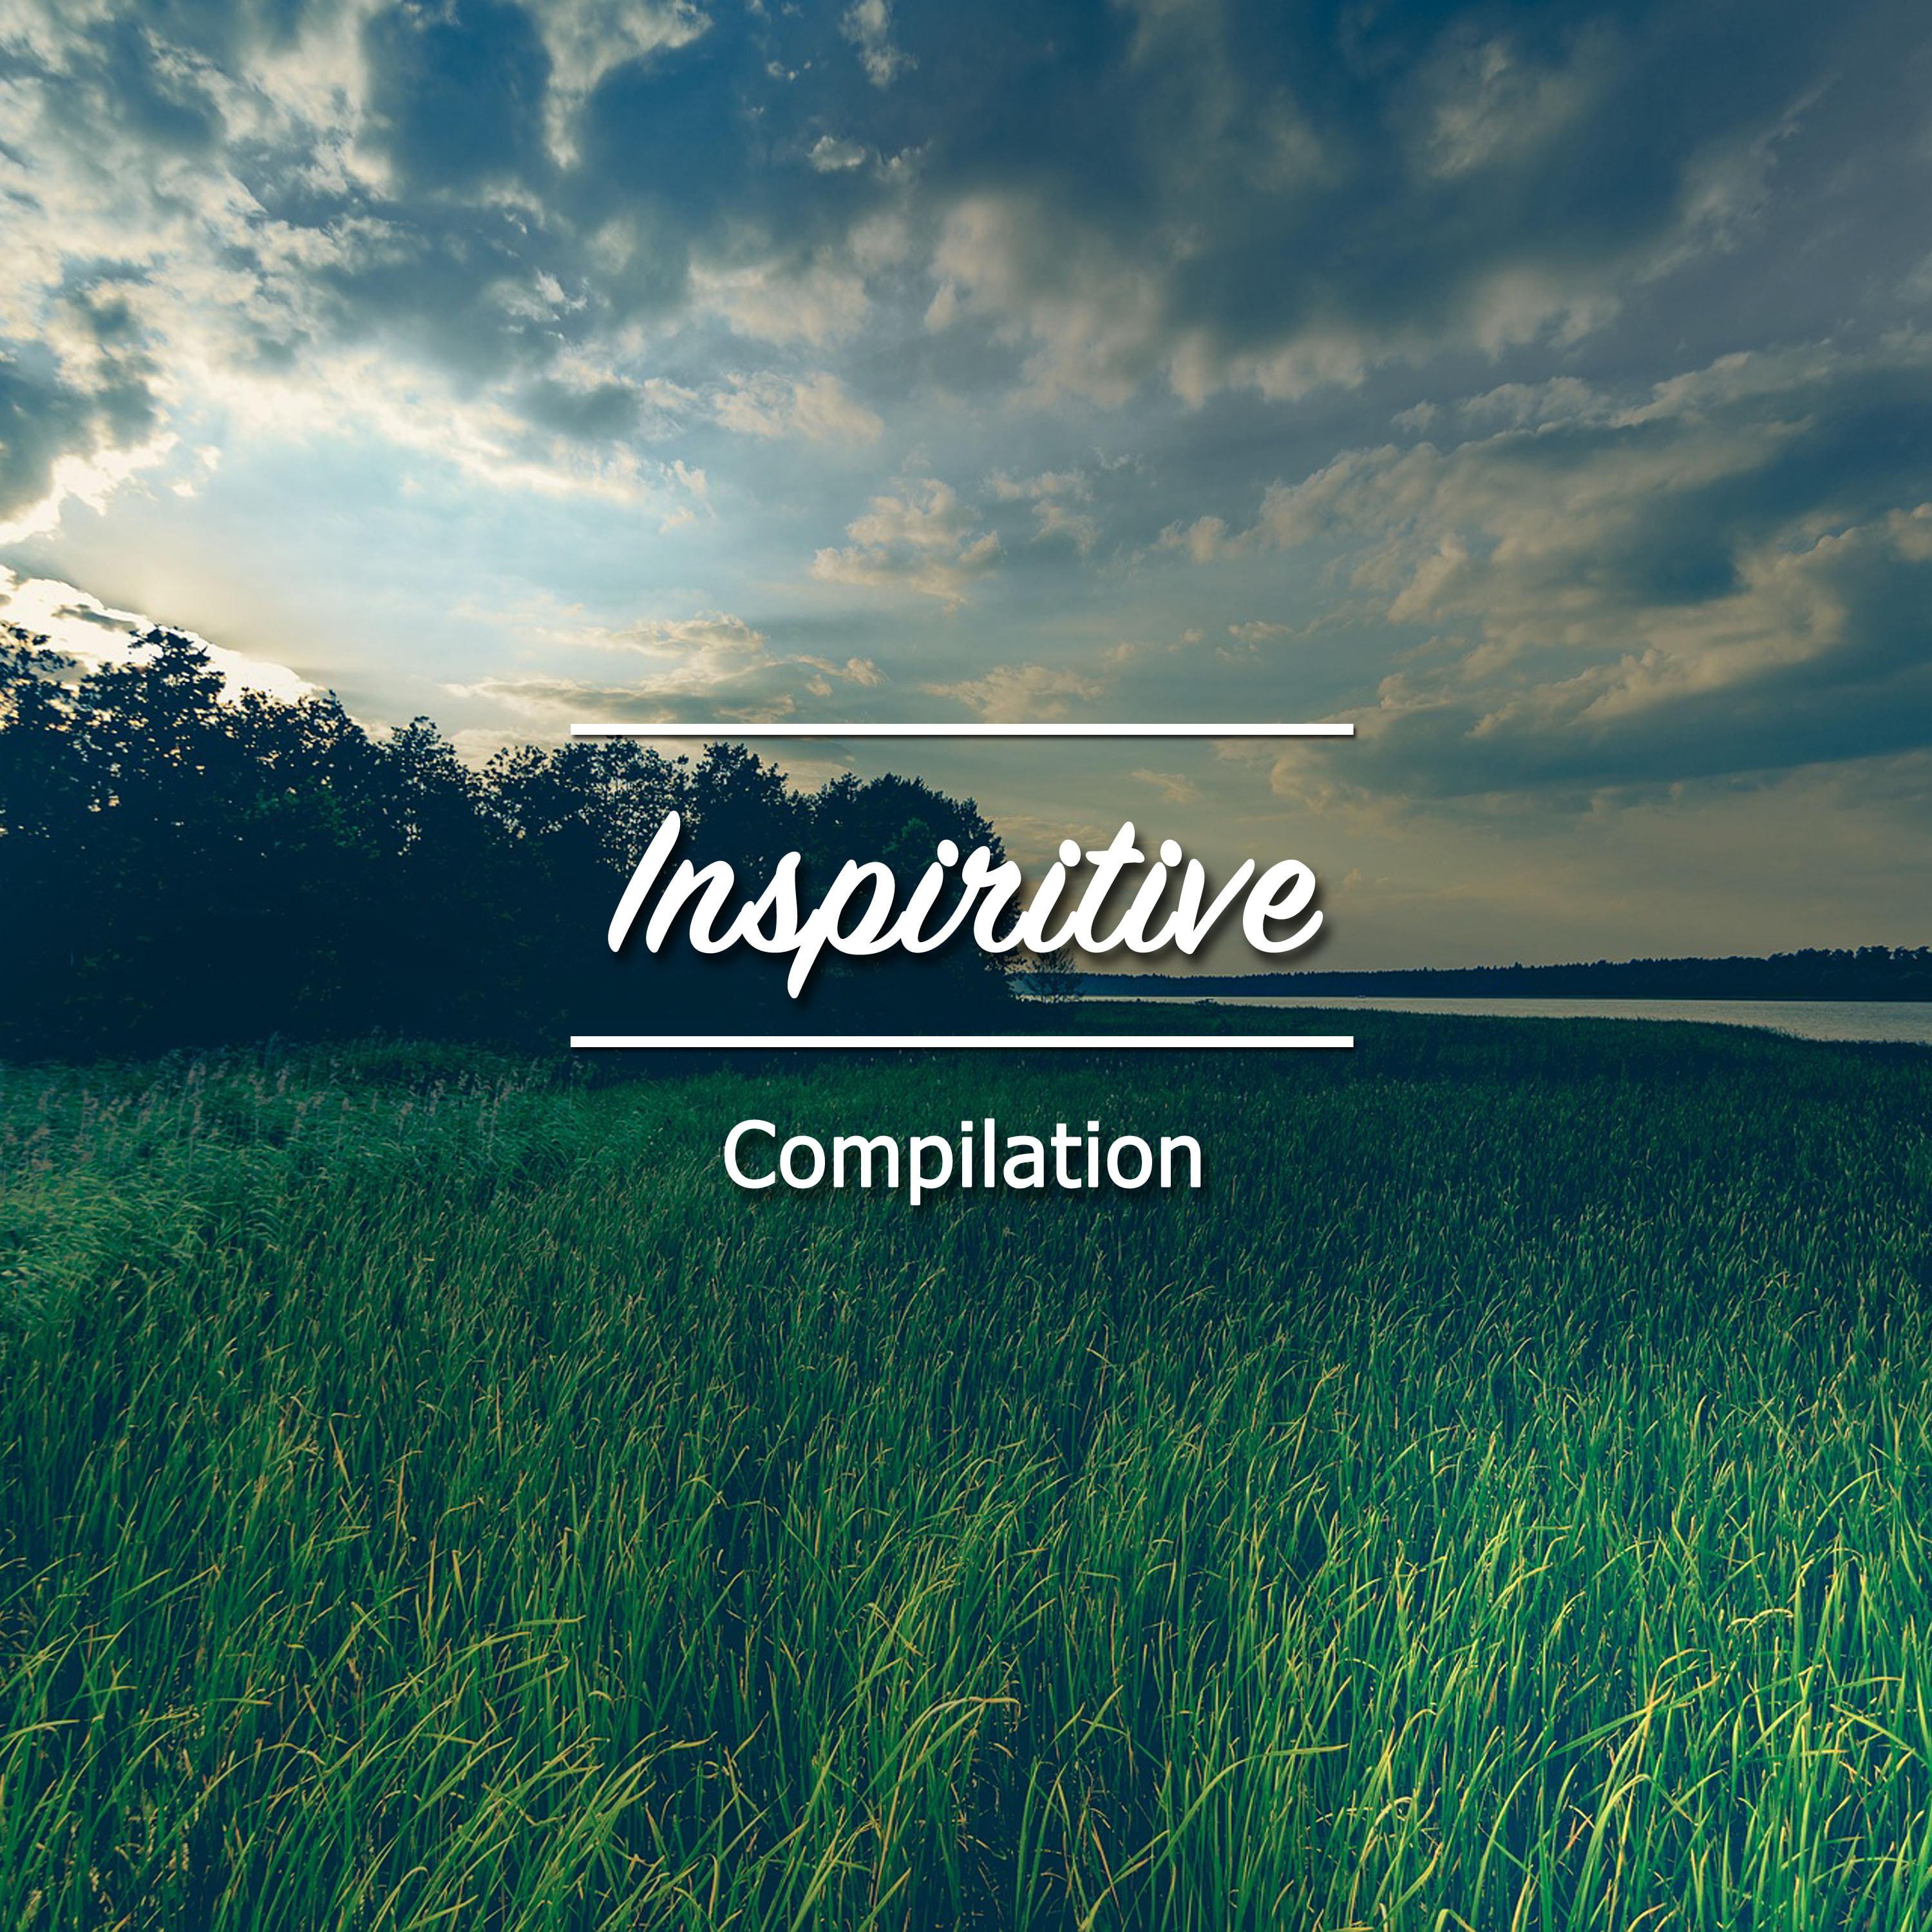 #10 Inspiritive Compilation to Aid Sleep & Dreams